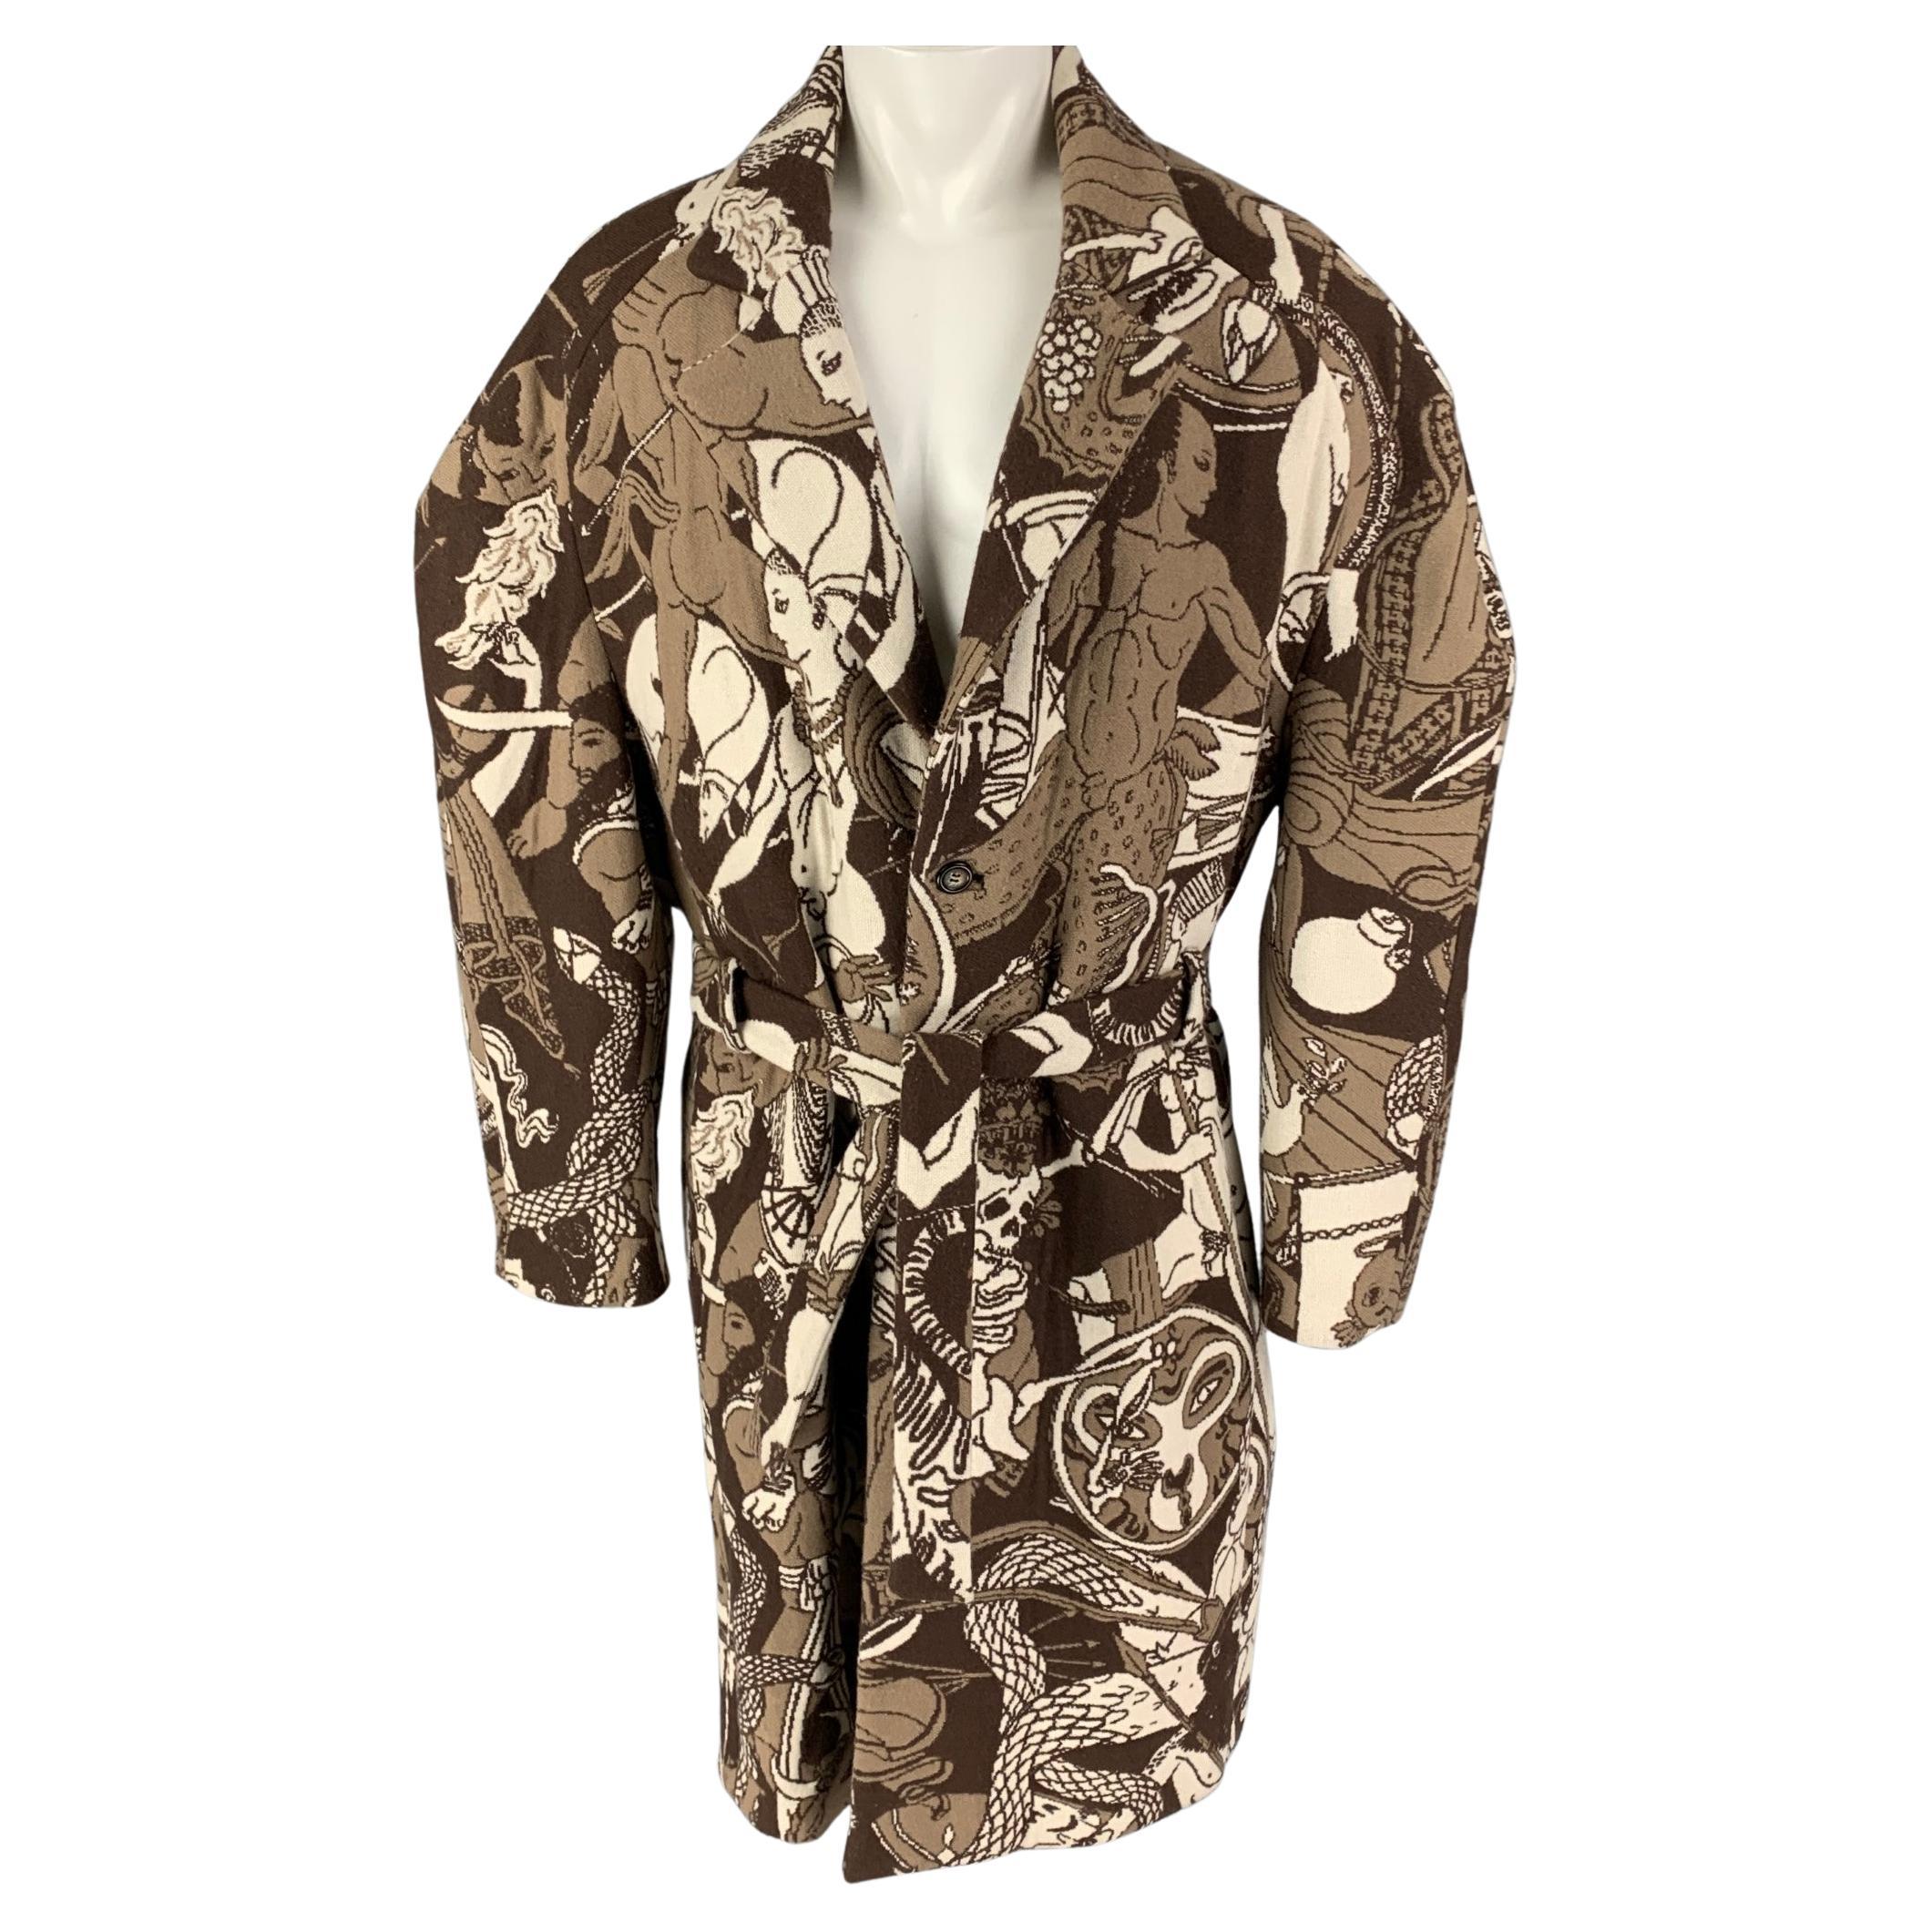 EDWARD CRUTCHLEY FW 18 Size S Brown Beige Pattern Wool Cashmere Coat